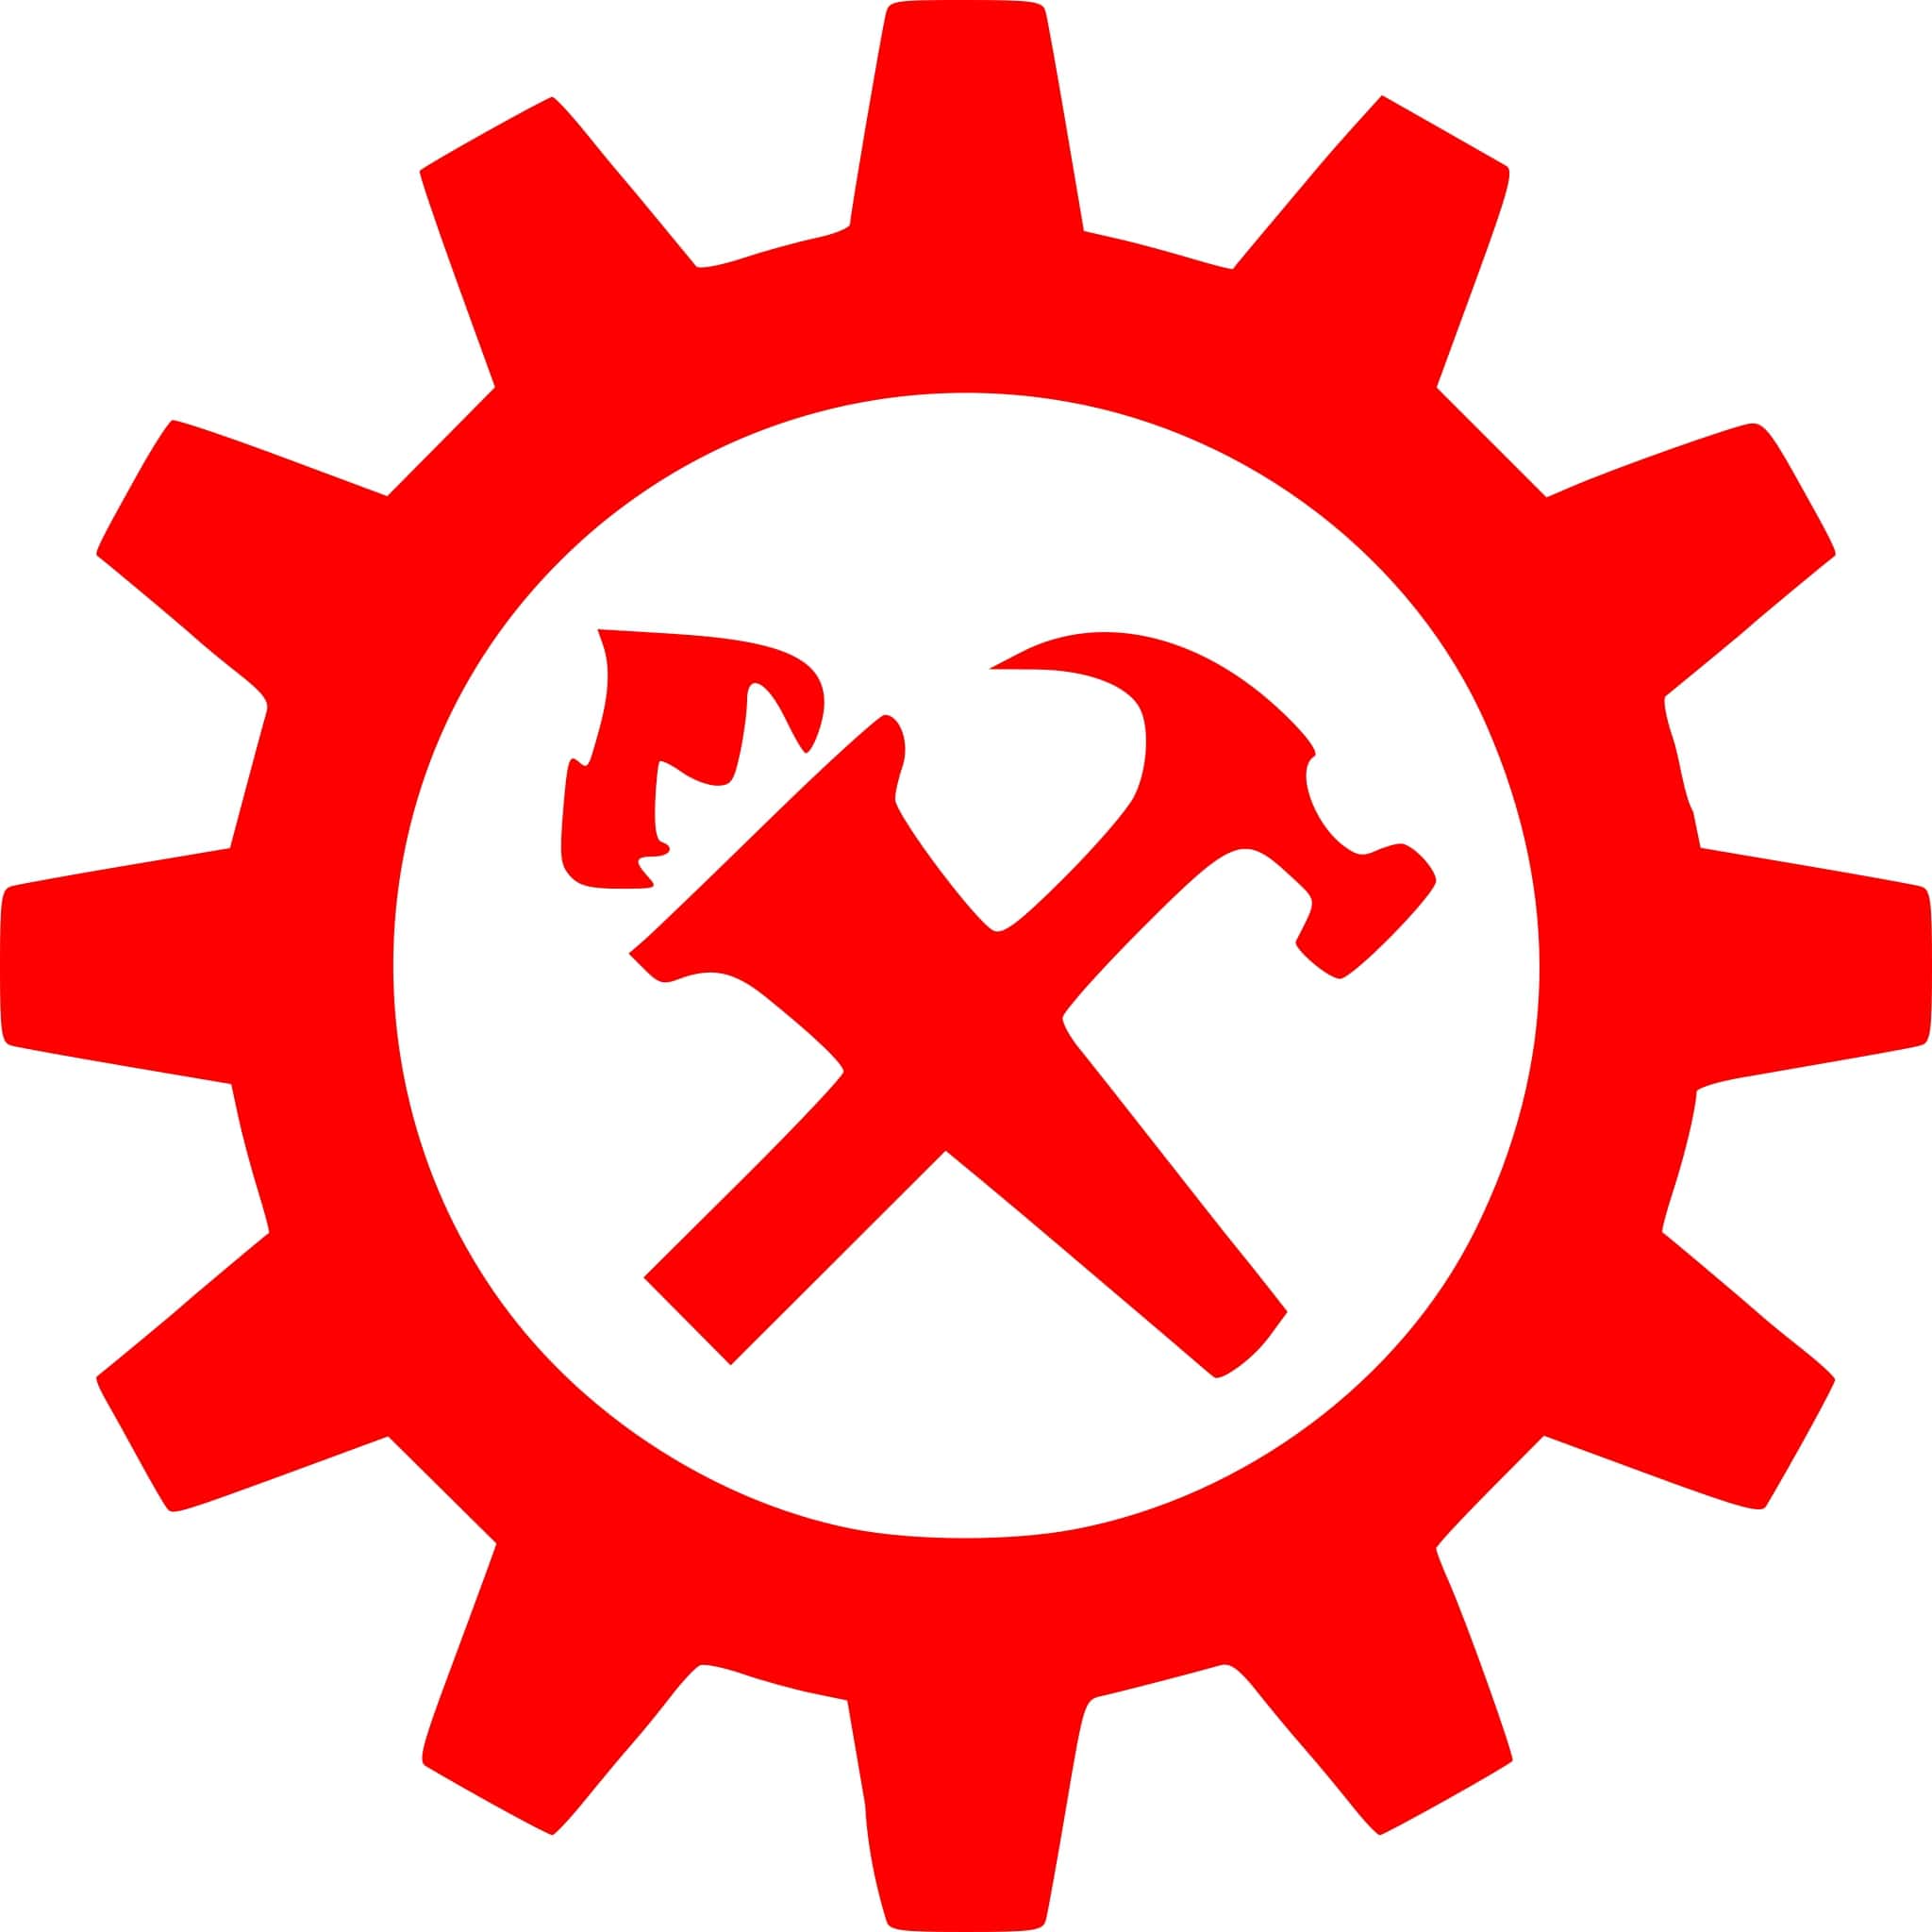 Social Democratic Party (Portugal) - Wikipedia